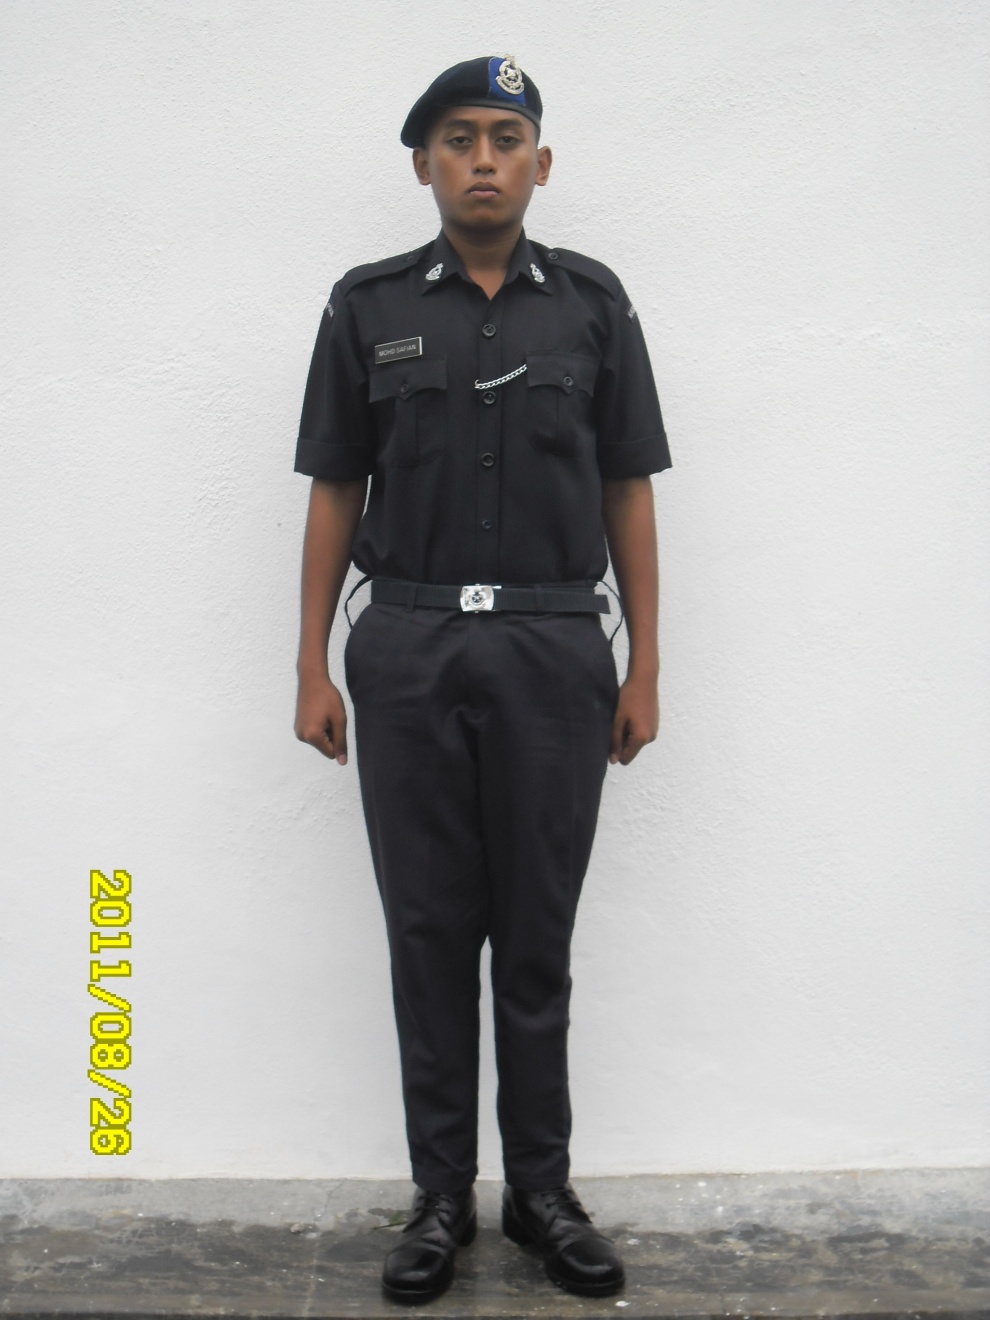 Kadet Polis SMKDI: Uniform